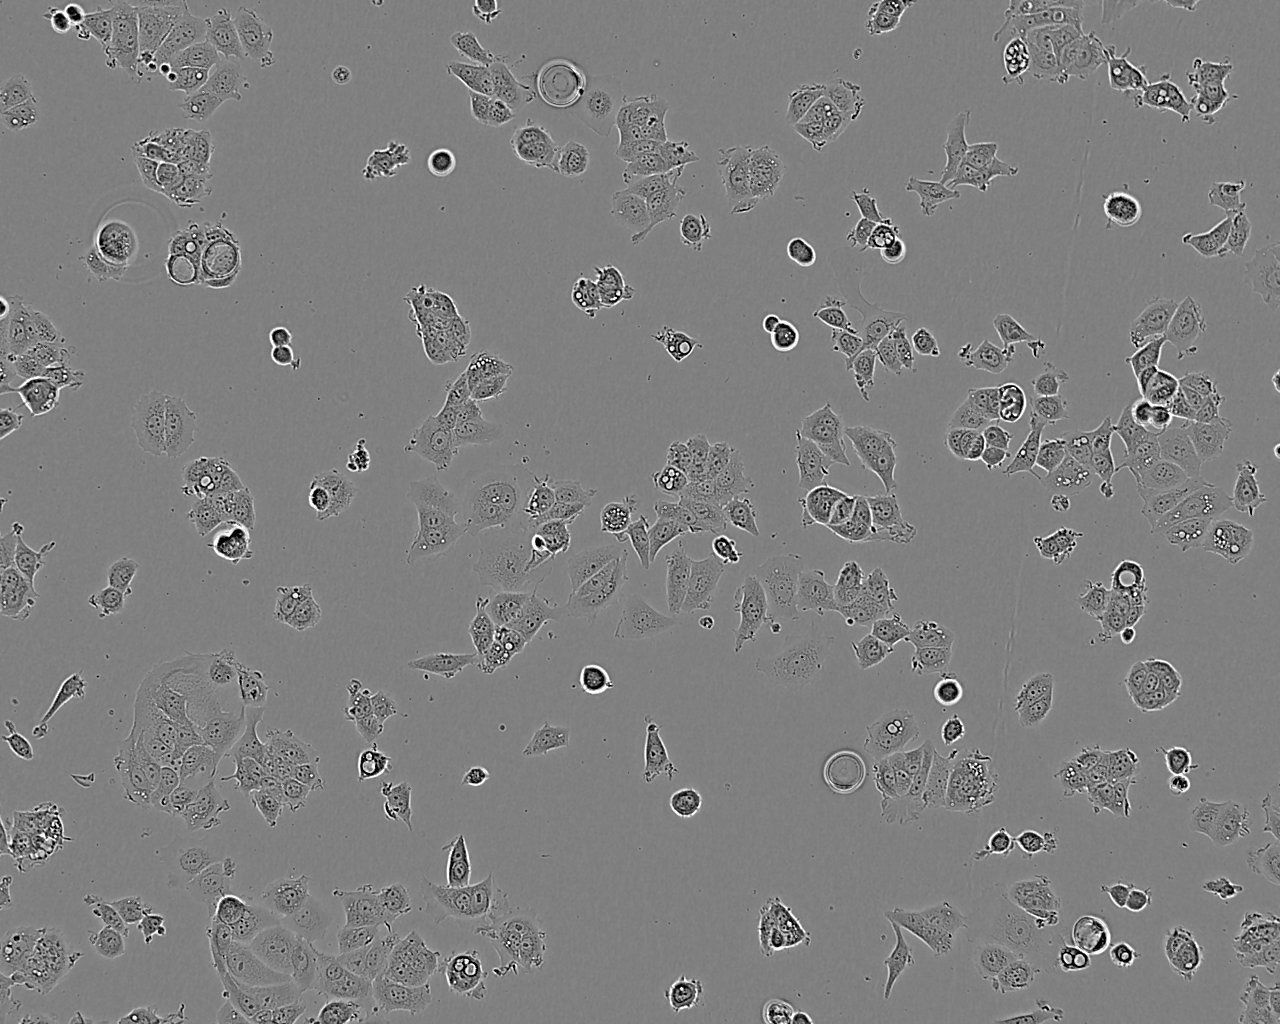 NCI-H1770 epithelioid cells人非小细胞肺癌细胞系